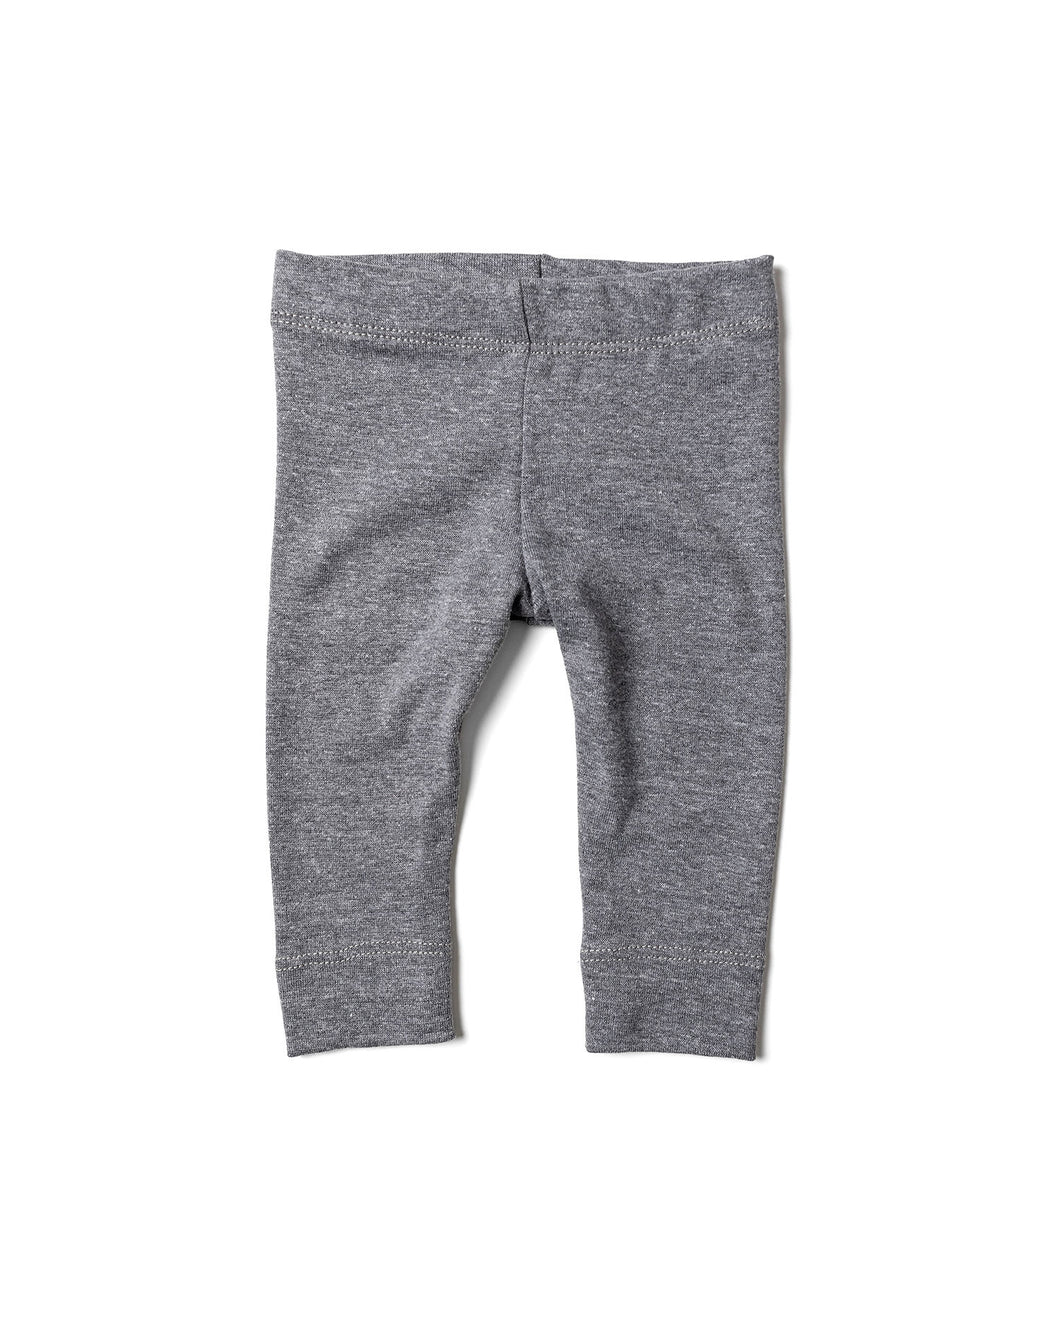 leggings - athletic gray